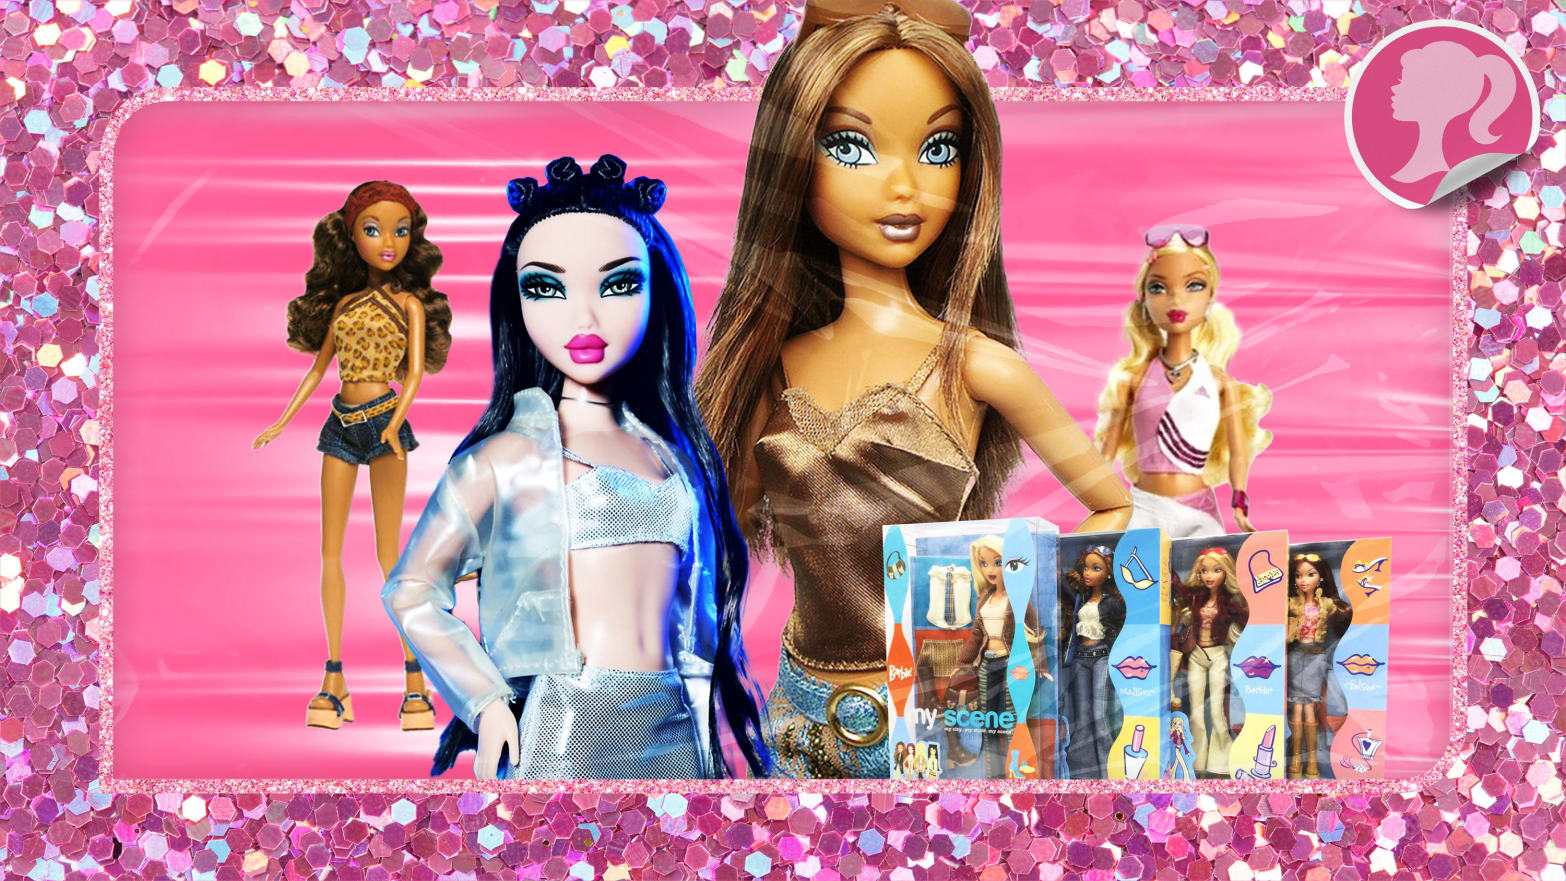 tre ser godt ud Sige The MyScene Barbies That Tried to Make Barbie Cool Again